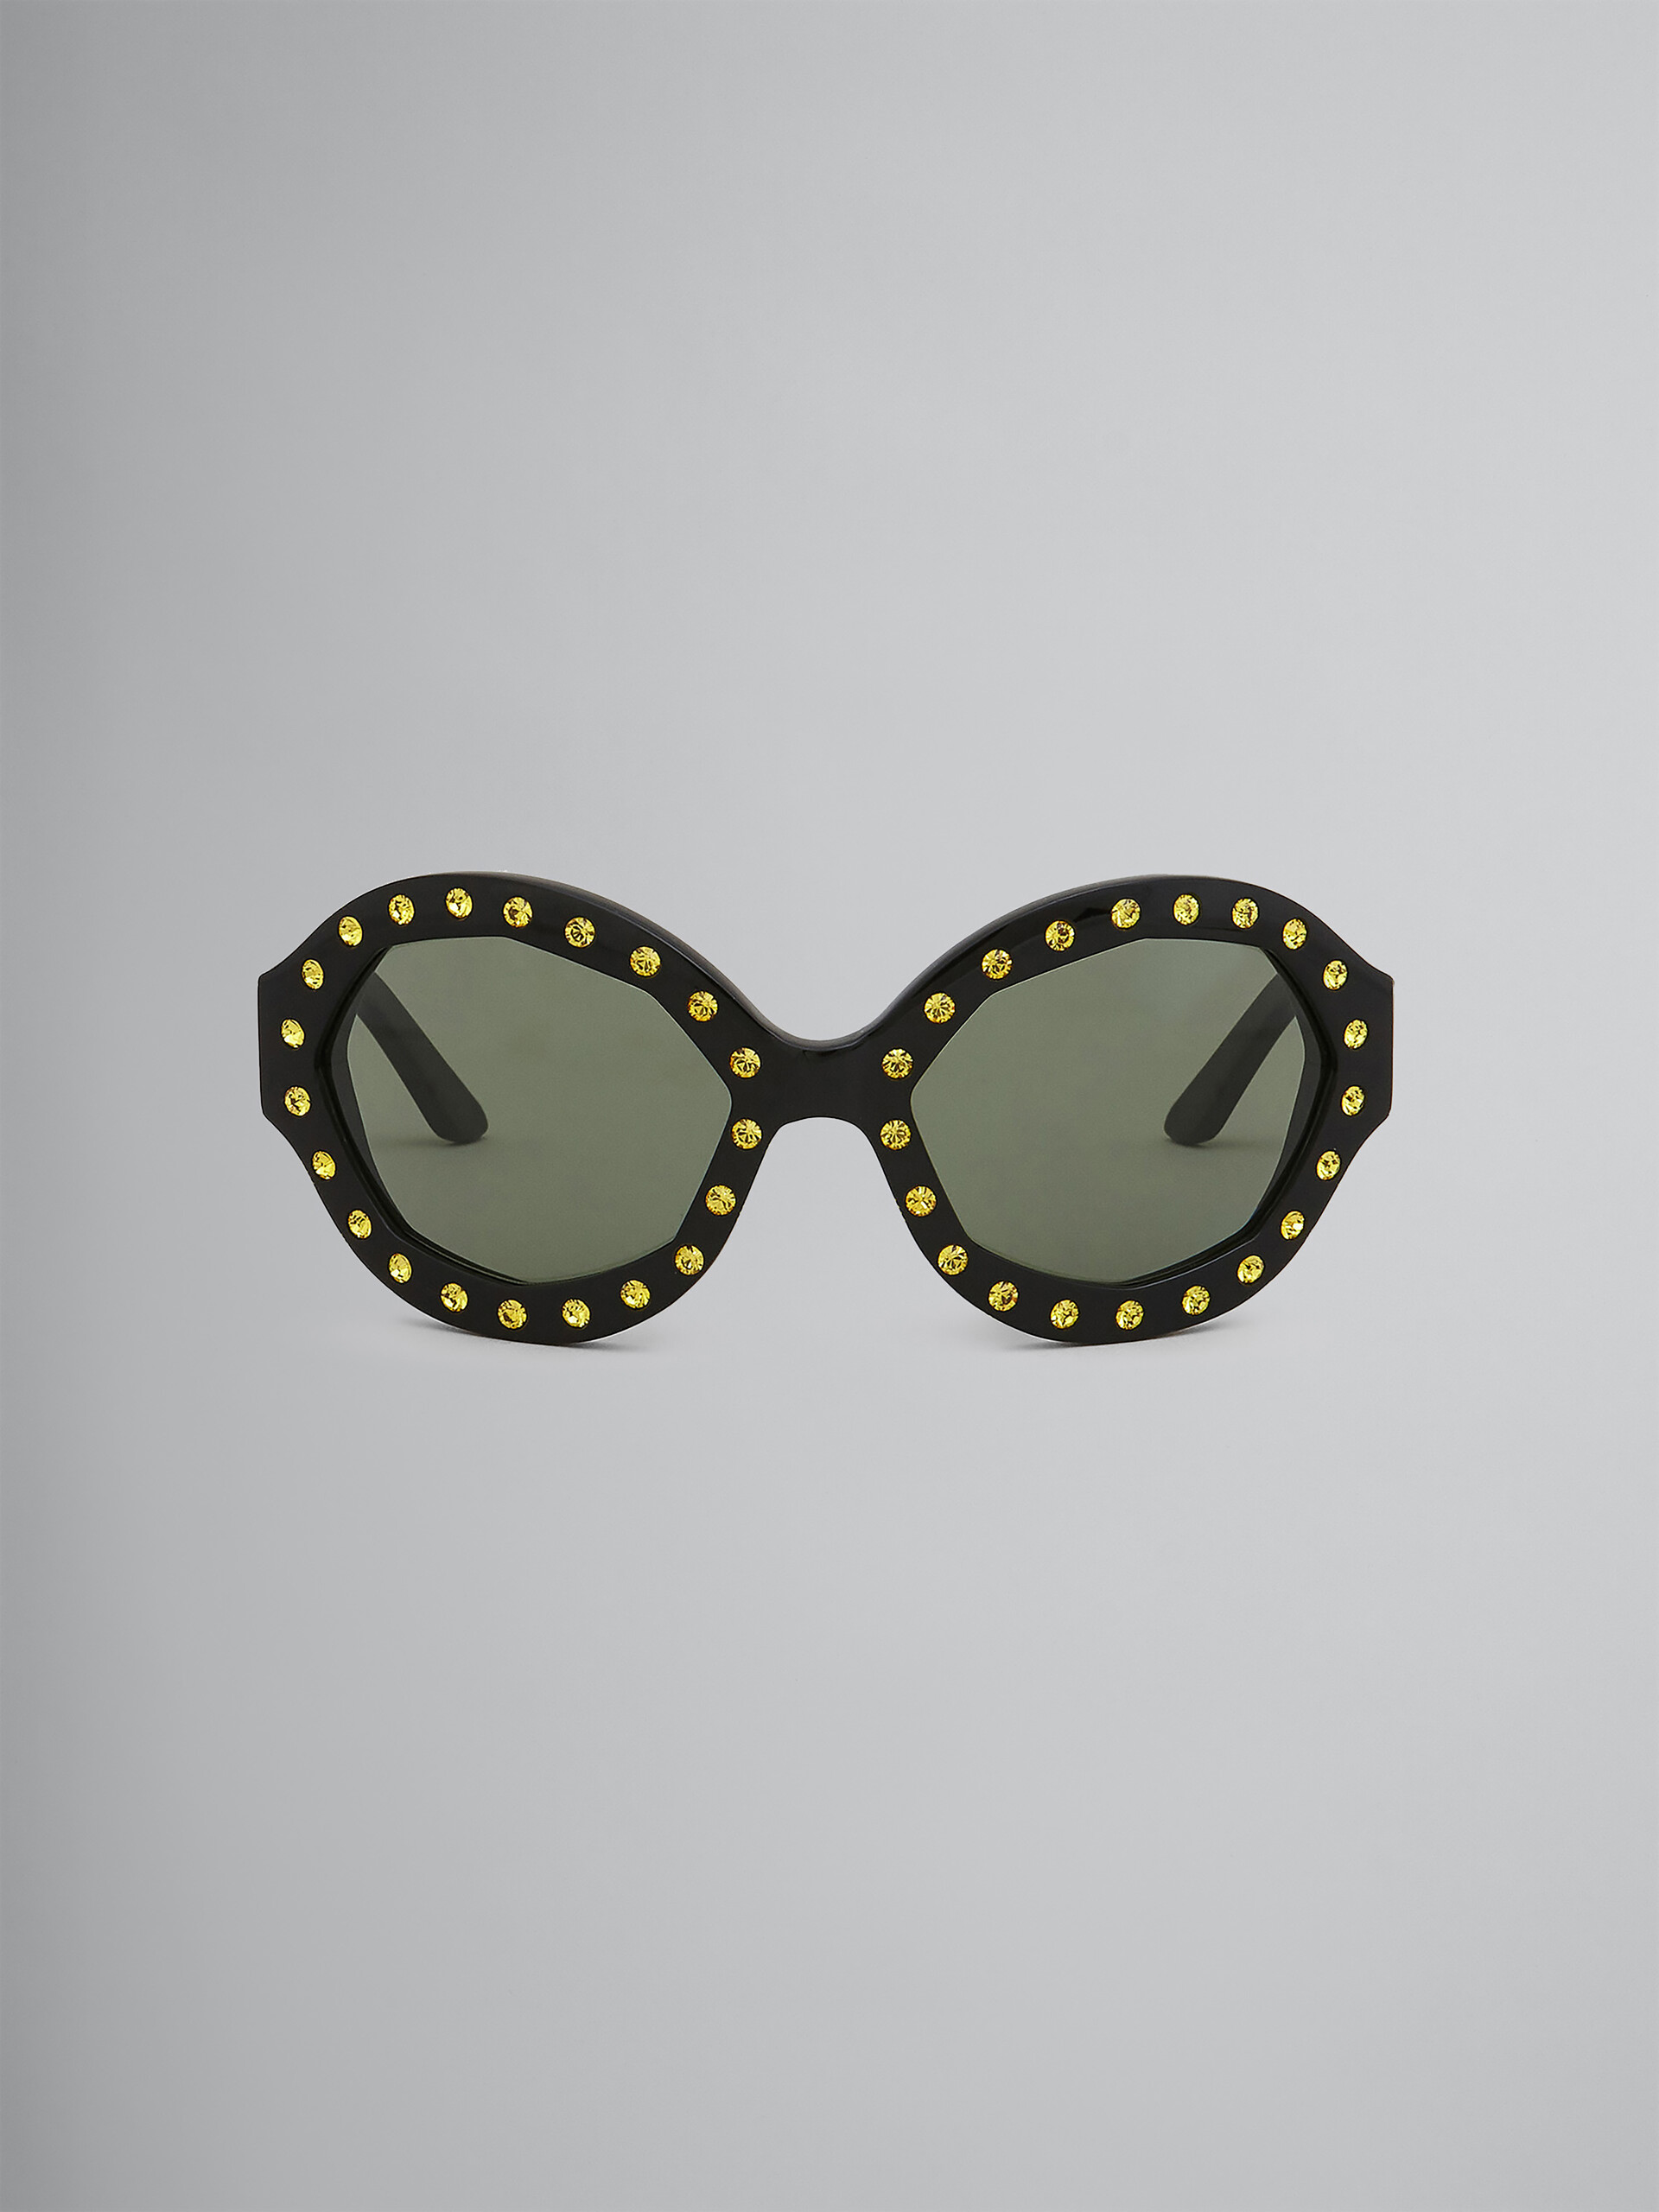 NAICA MINE black acetate sunglasses - Optical - Image 1